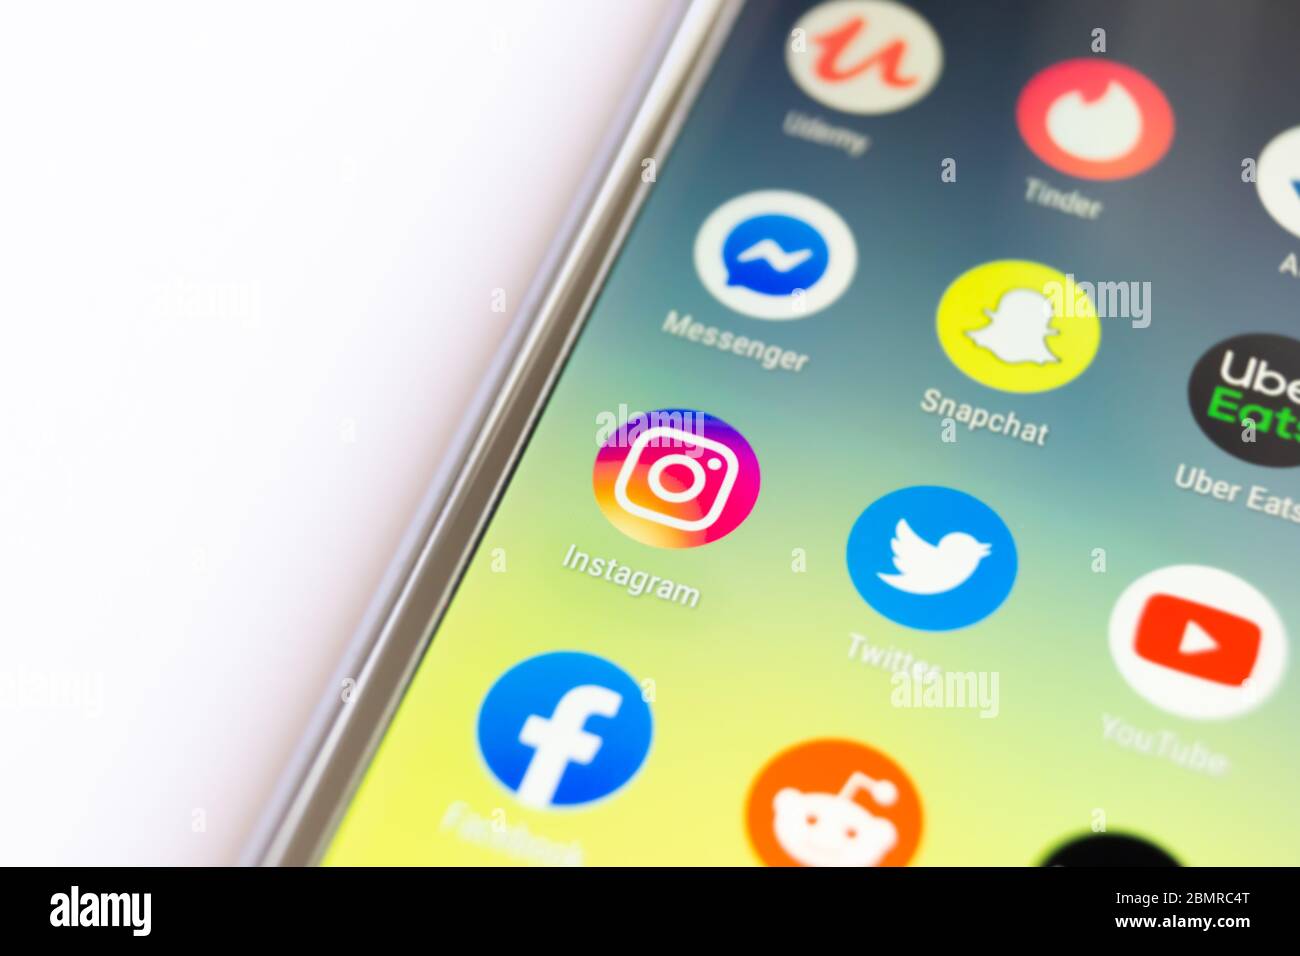 Melbourne, Australien – 23. Juni 2019: Instagram Mobile App-Symbol auf android-Gerät Homescreen, umgeben von konkurrierenden Social-Media-App-Icons. Stockfoto